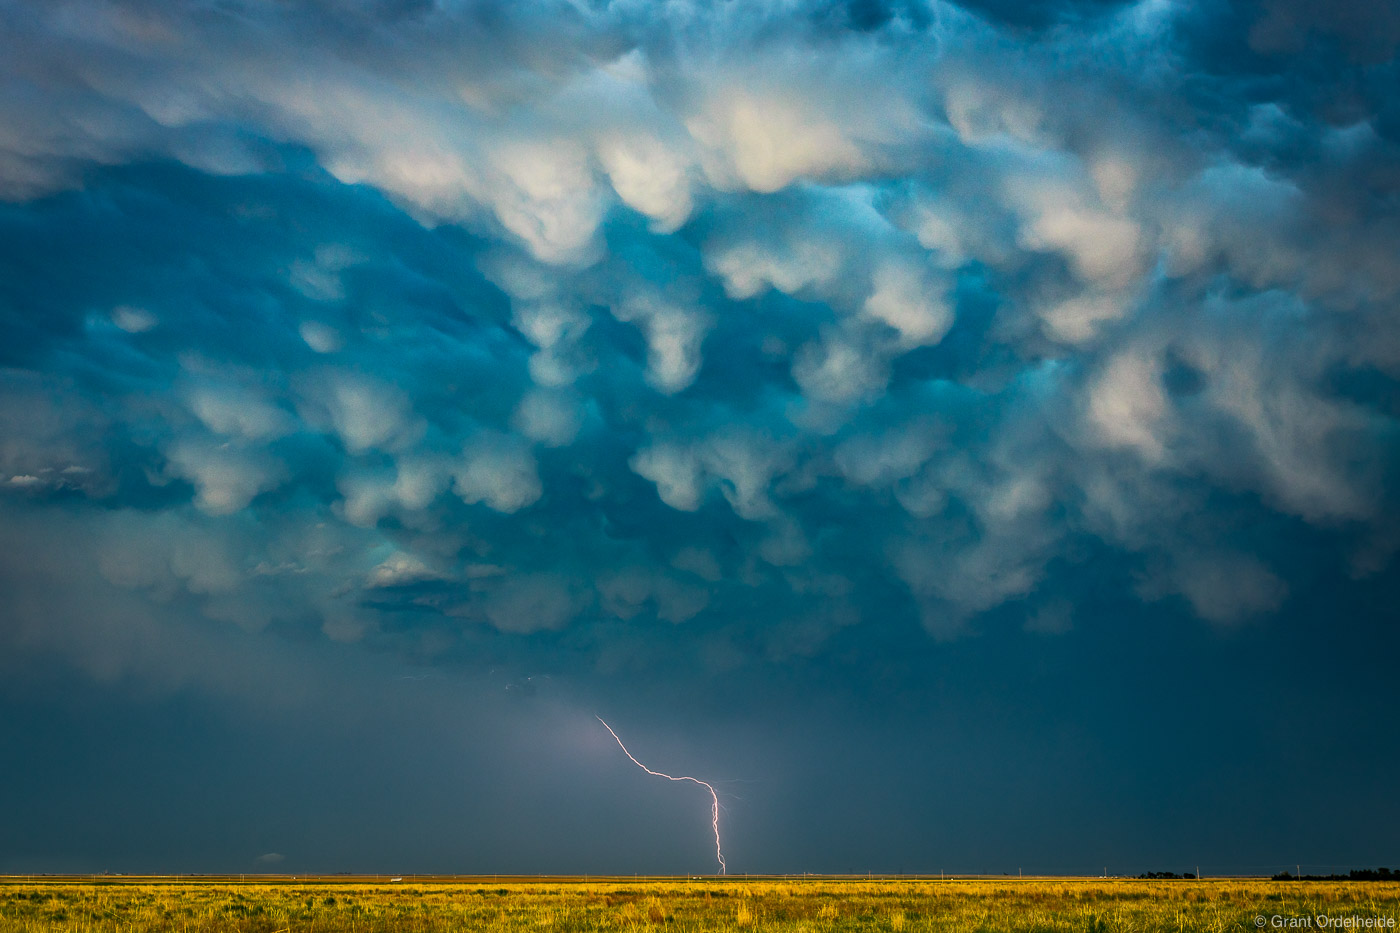 A lightning bolt and storm over rural Kansas.